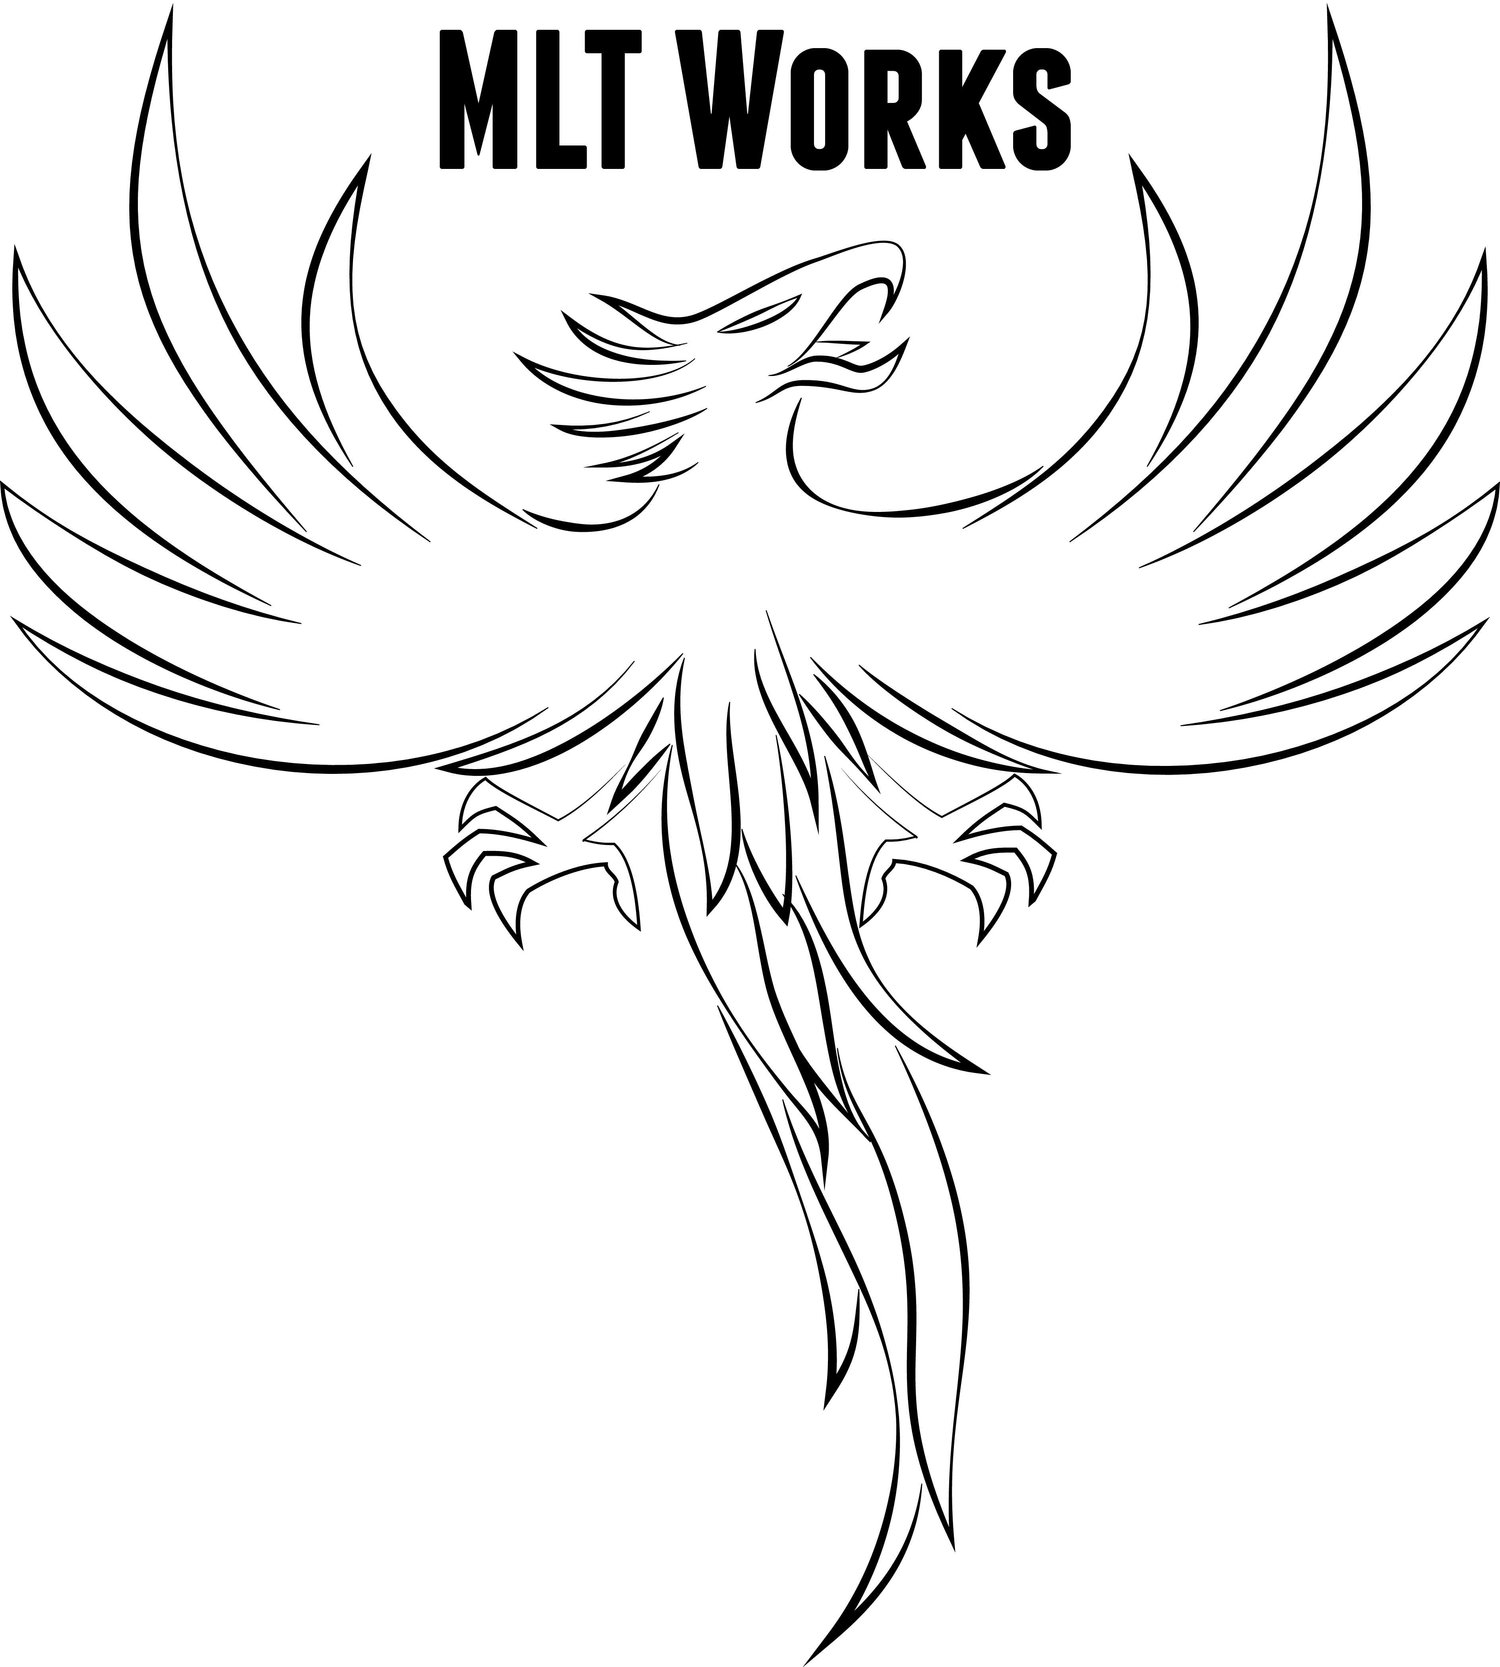 MLT Works